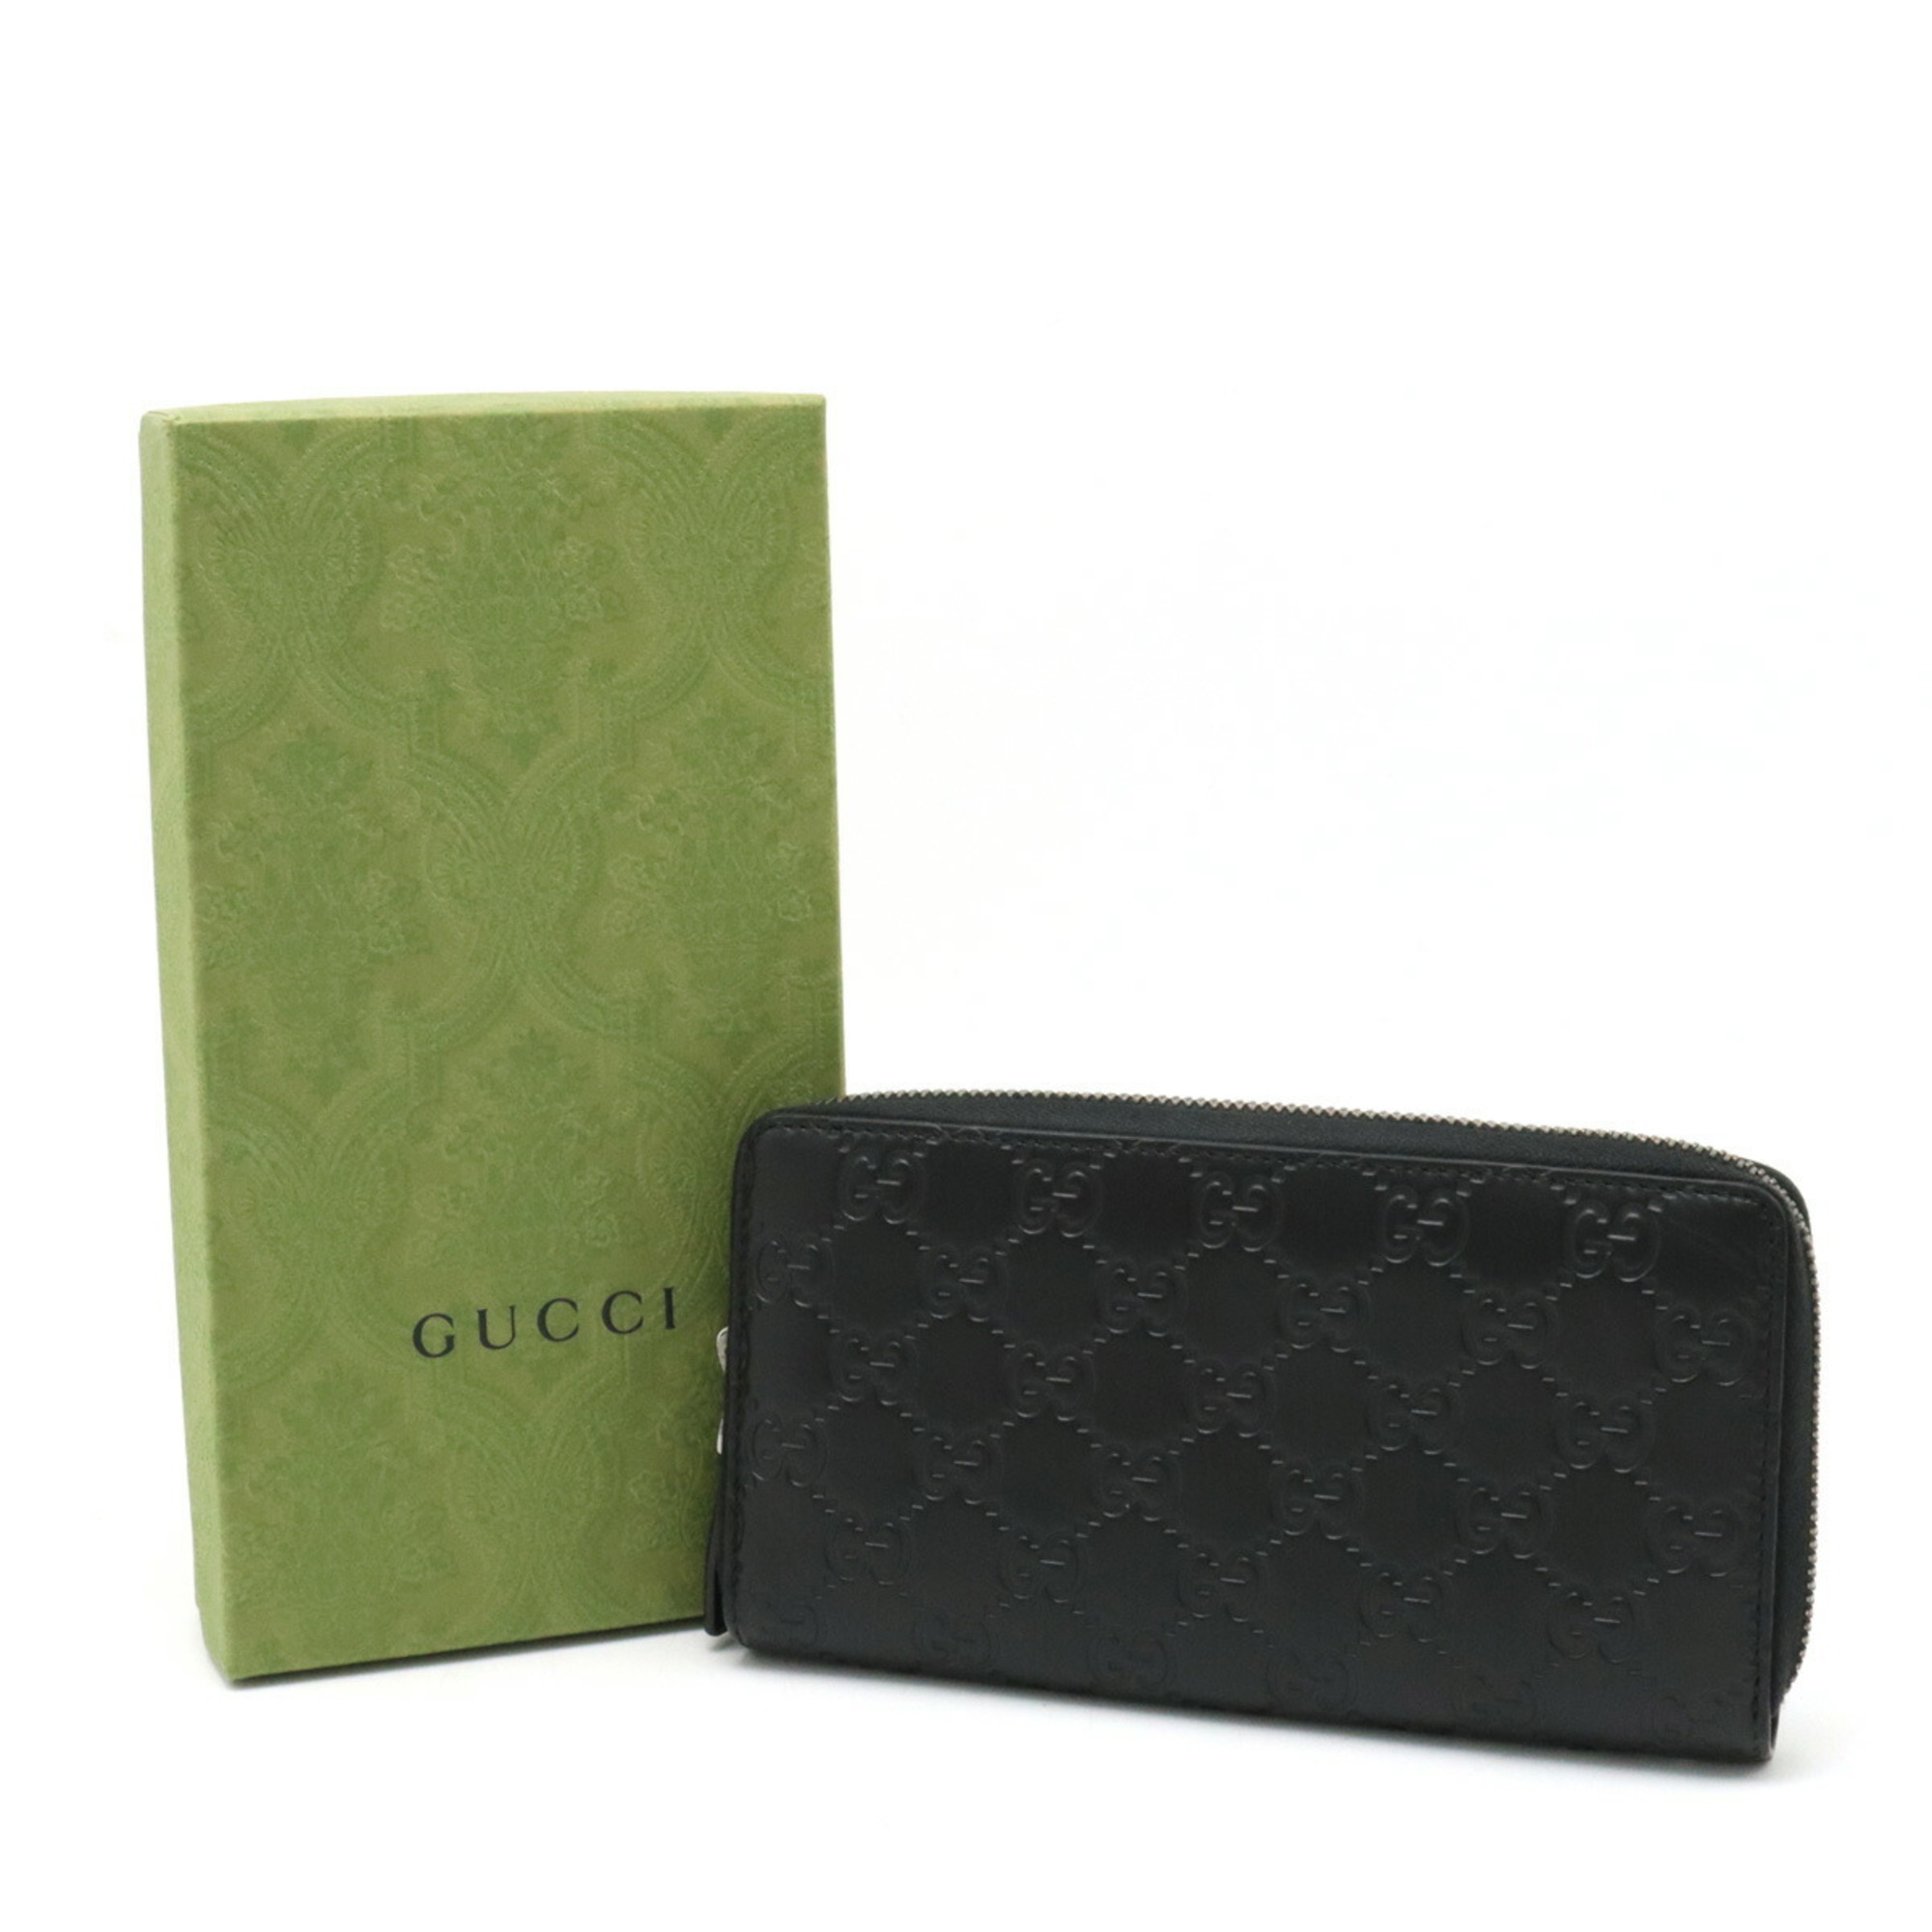 GUCCI Gucci Guccisima Round Long Wallet Leather Black 307987